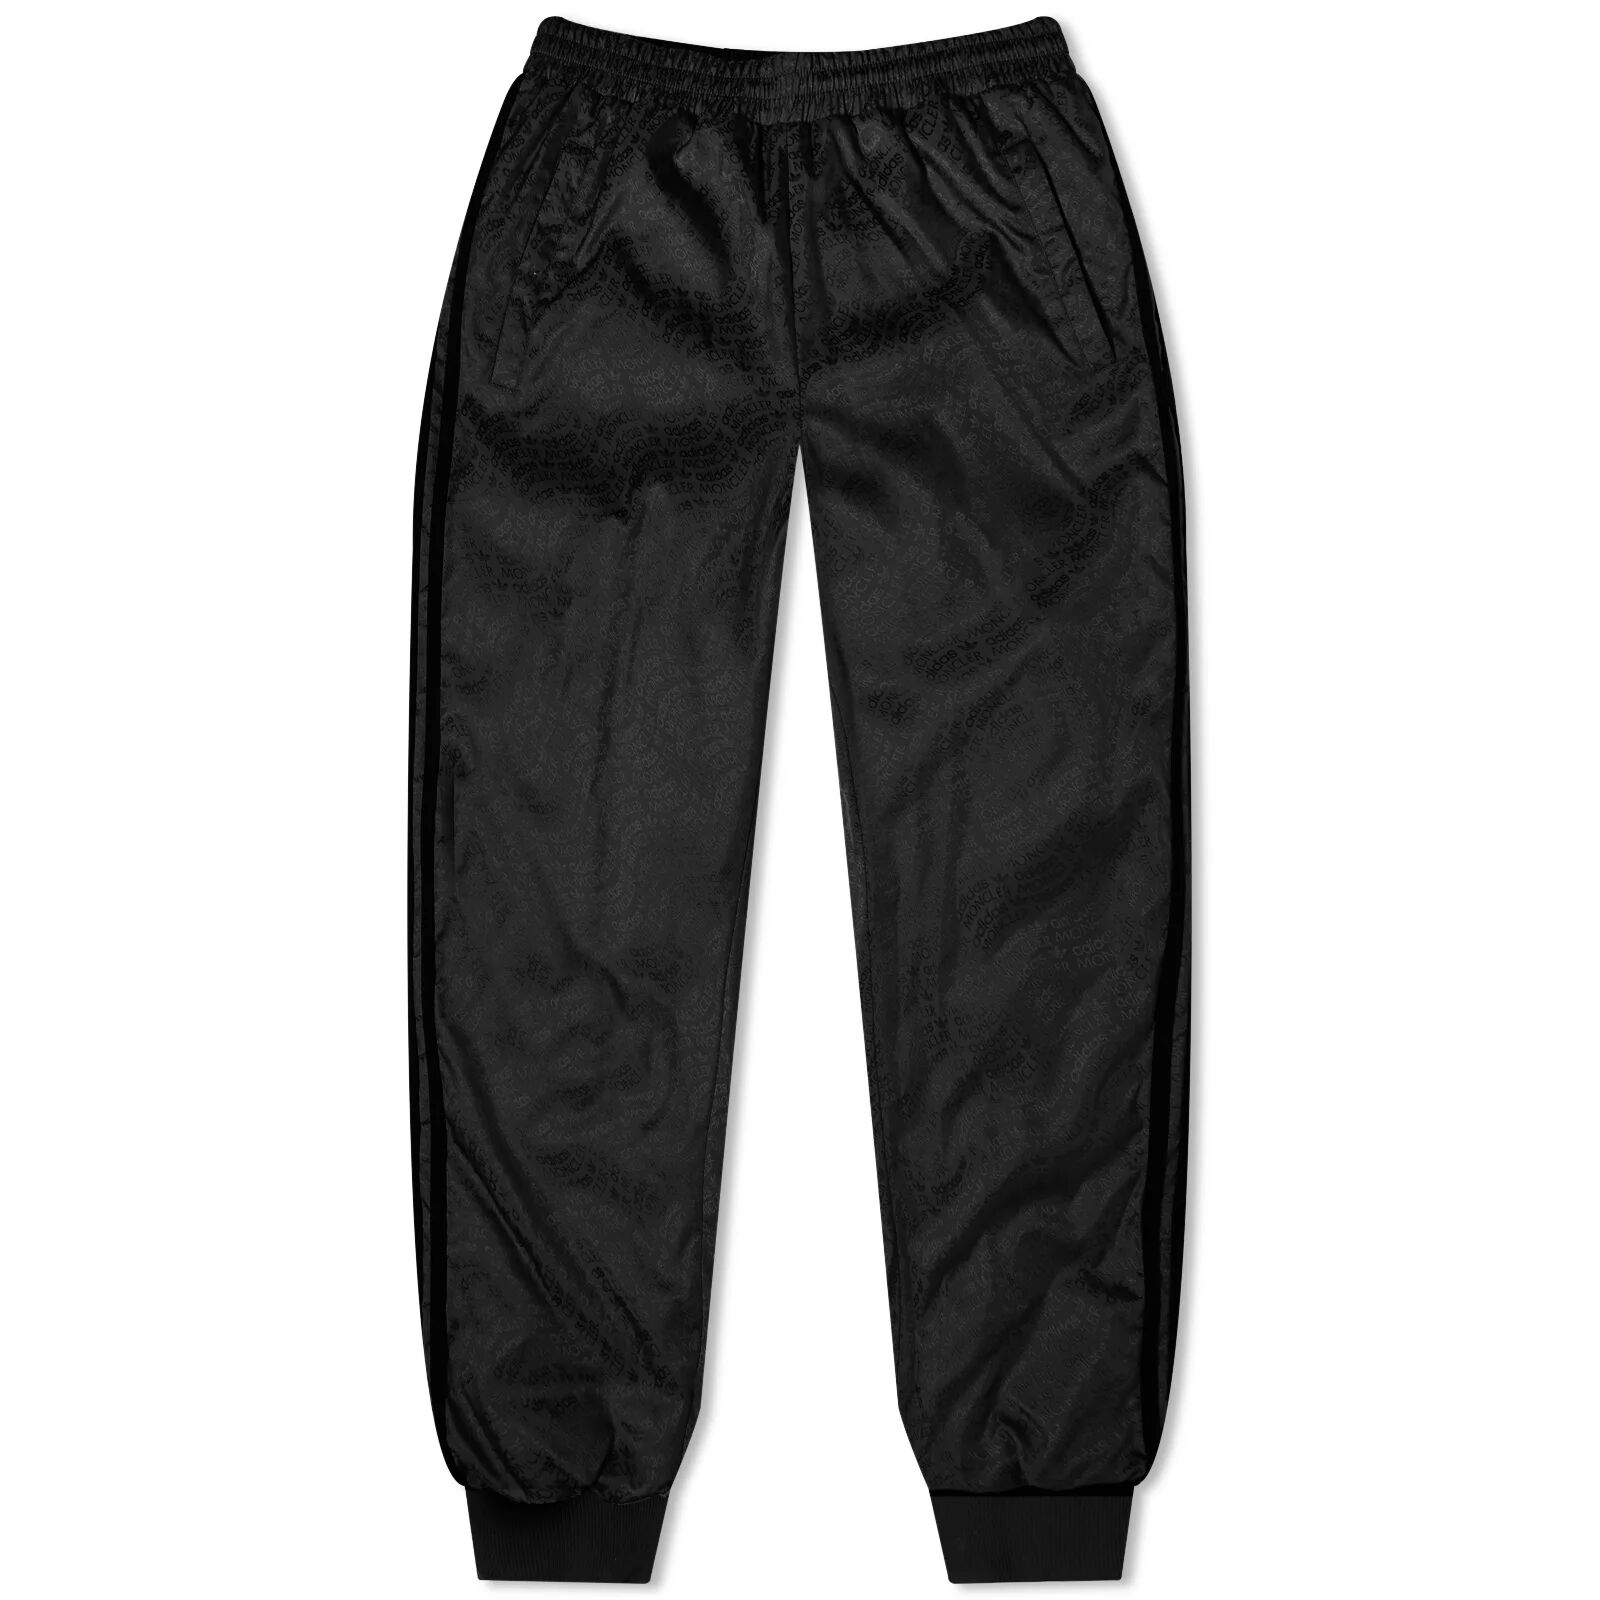 Moncler Men's x adidas Originals Reversible Down Trousers in Black, Size Medium